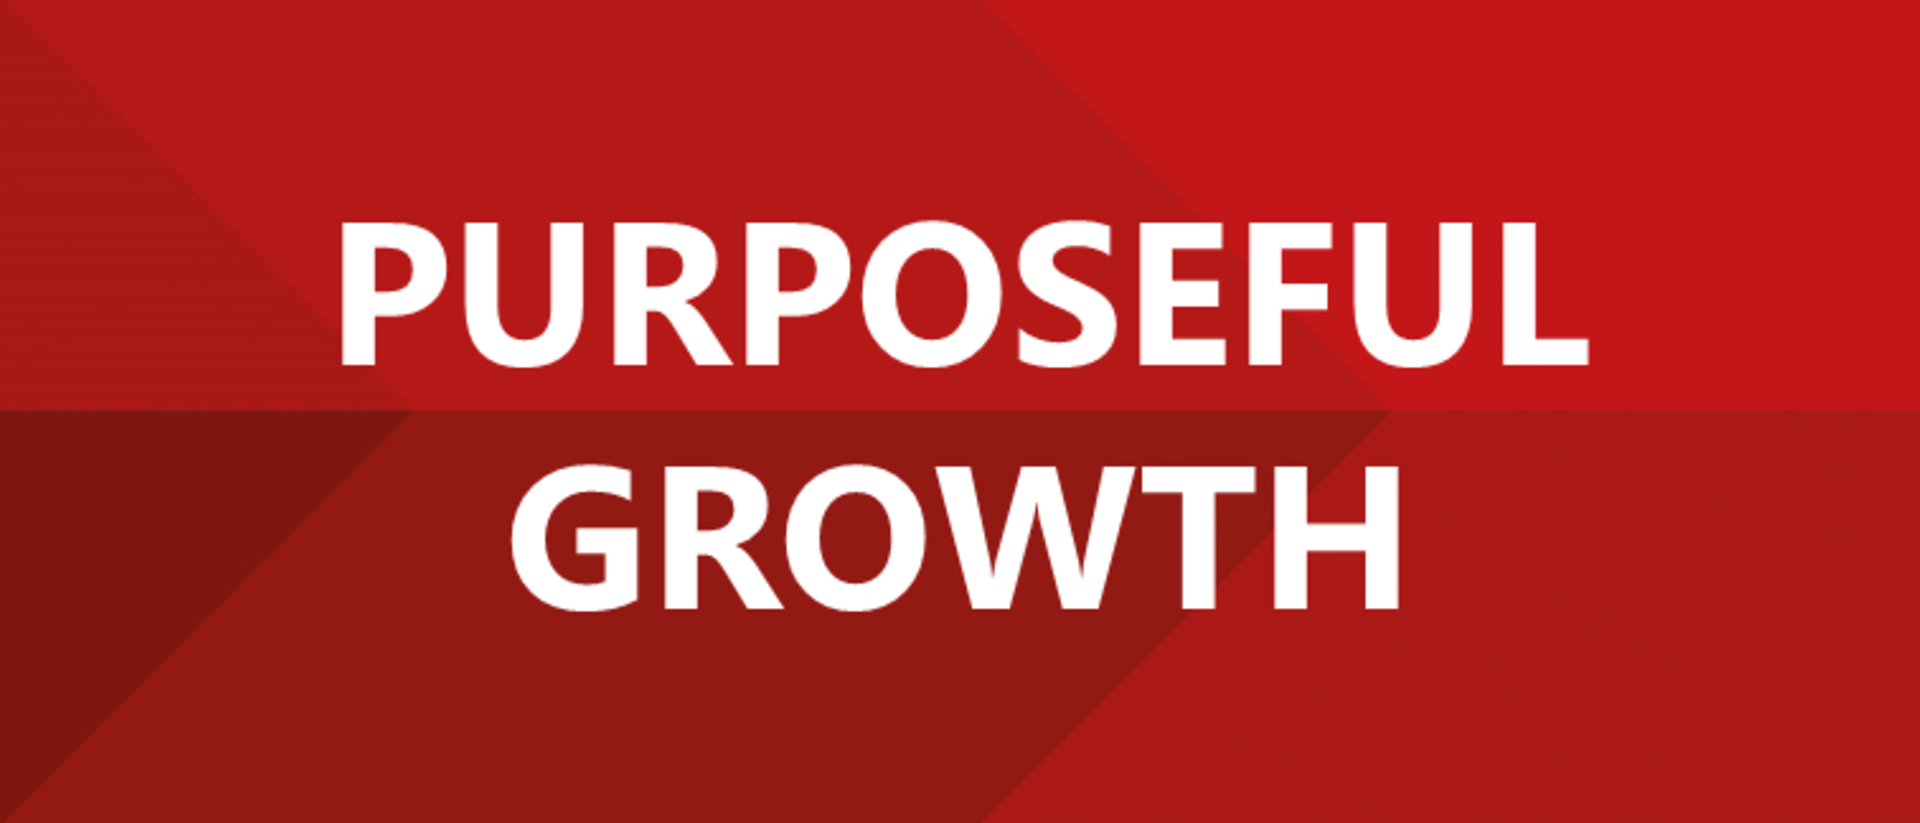 purposeful-growth-teaser